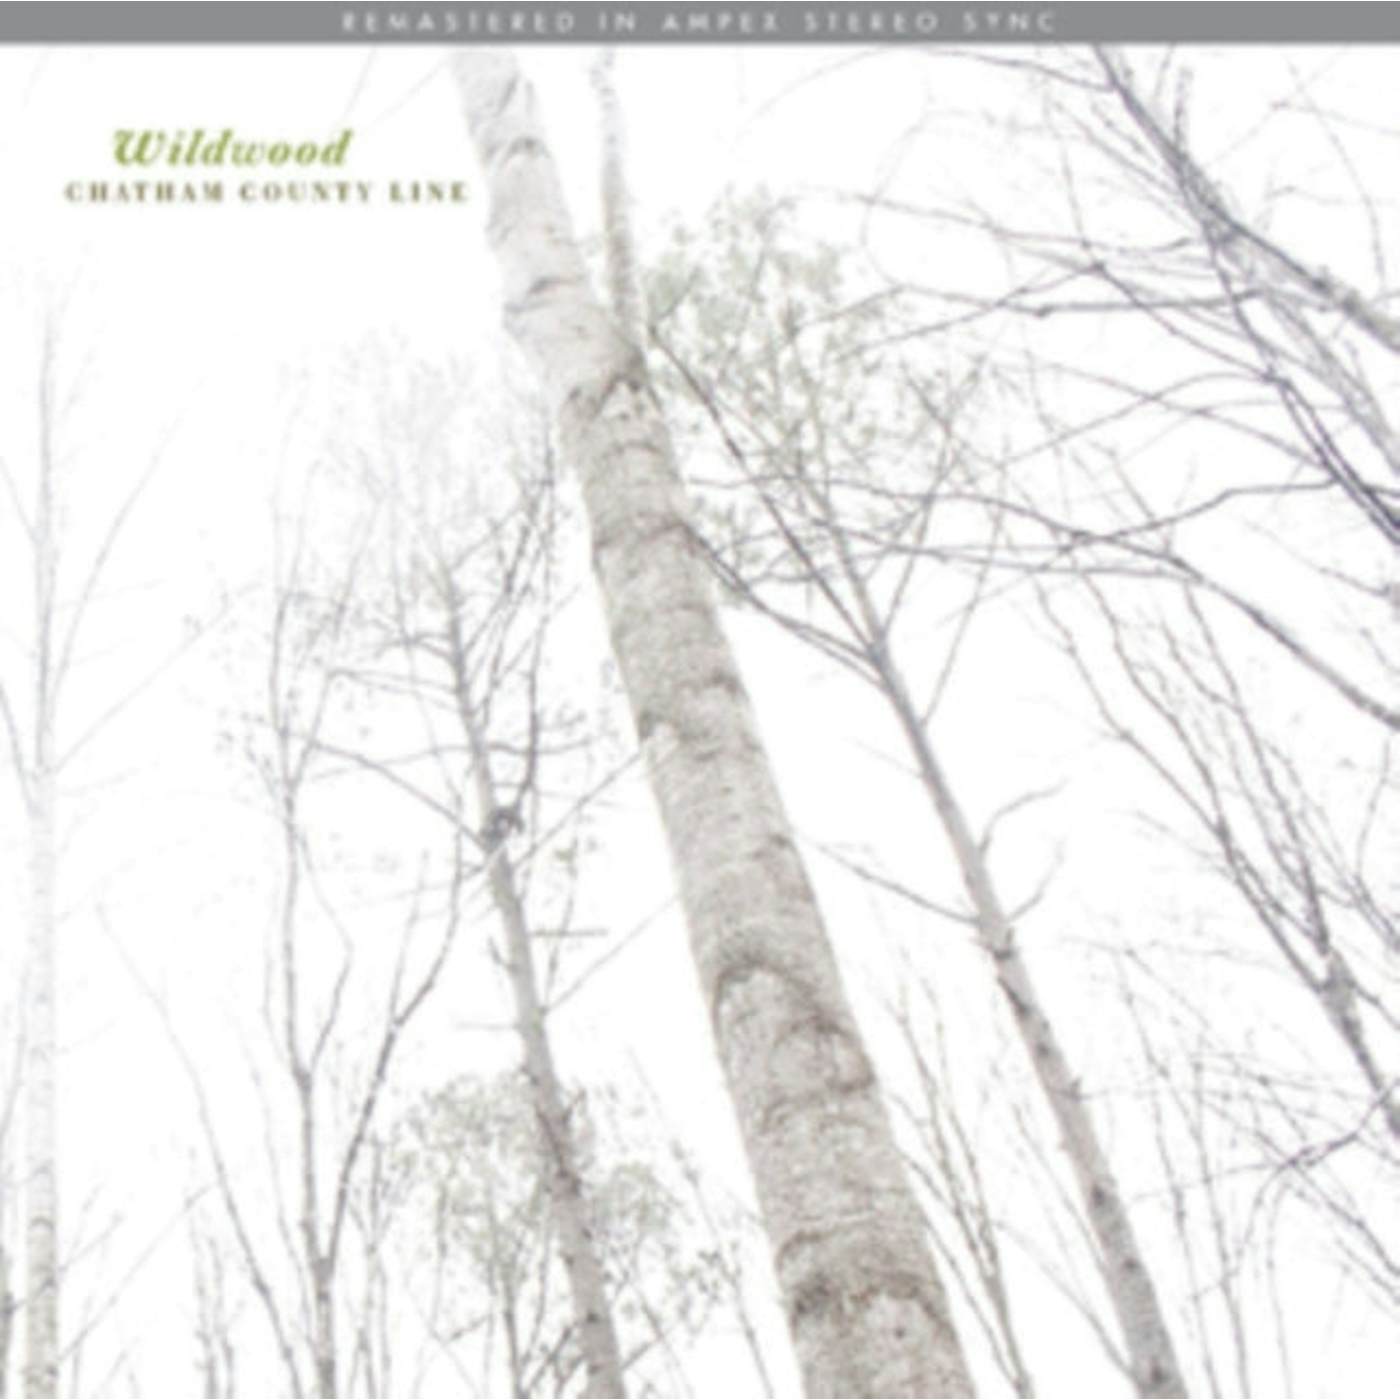 Chatham County Line LP - Wildwood (Remastered) (Vinyl)